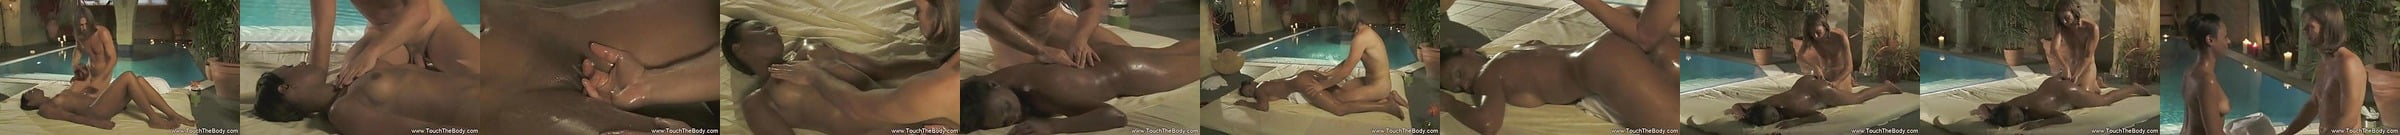 Anal Massage Secrets Revealed Free Xxx Anal Hd Porn 76 Xhamster